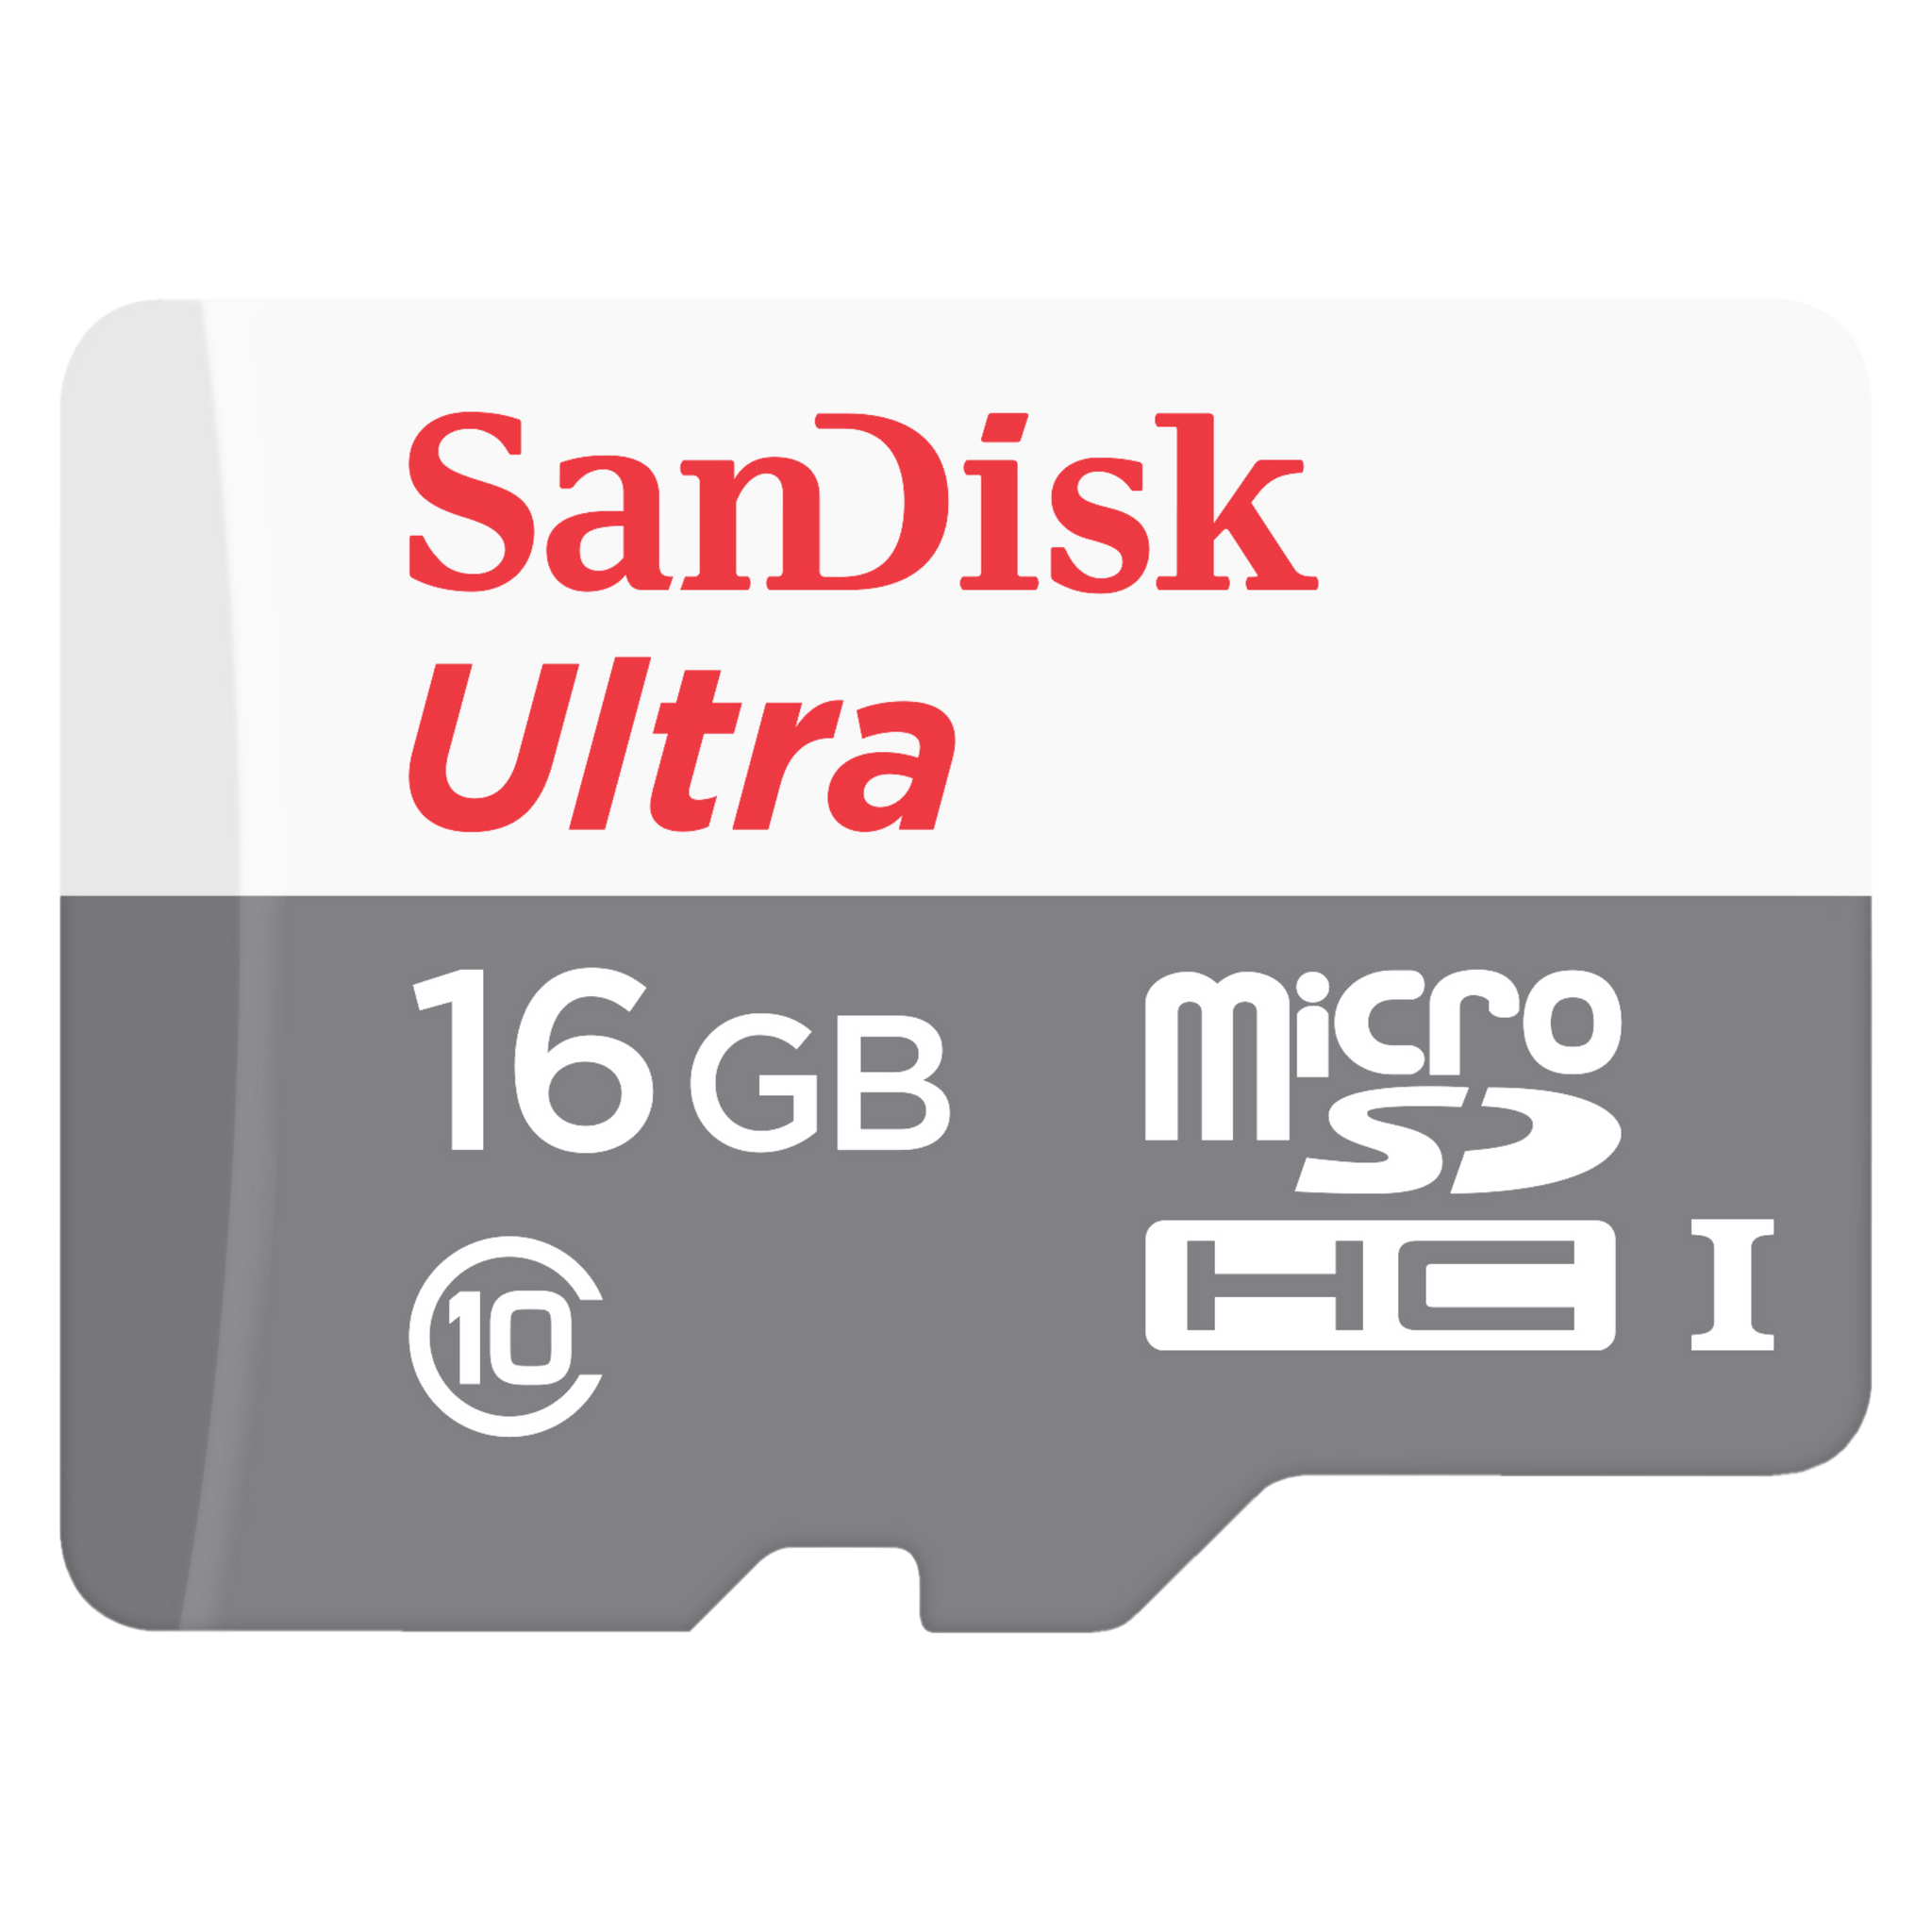 Tarjeta Micro Sdxc Sandisk Ultra 128gb, Uhs-i, C10, 100mb/s